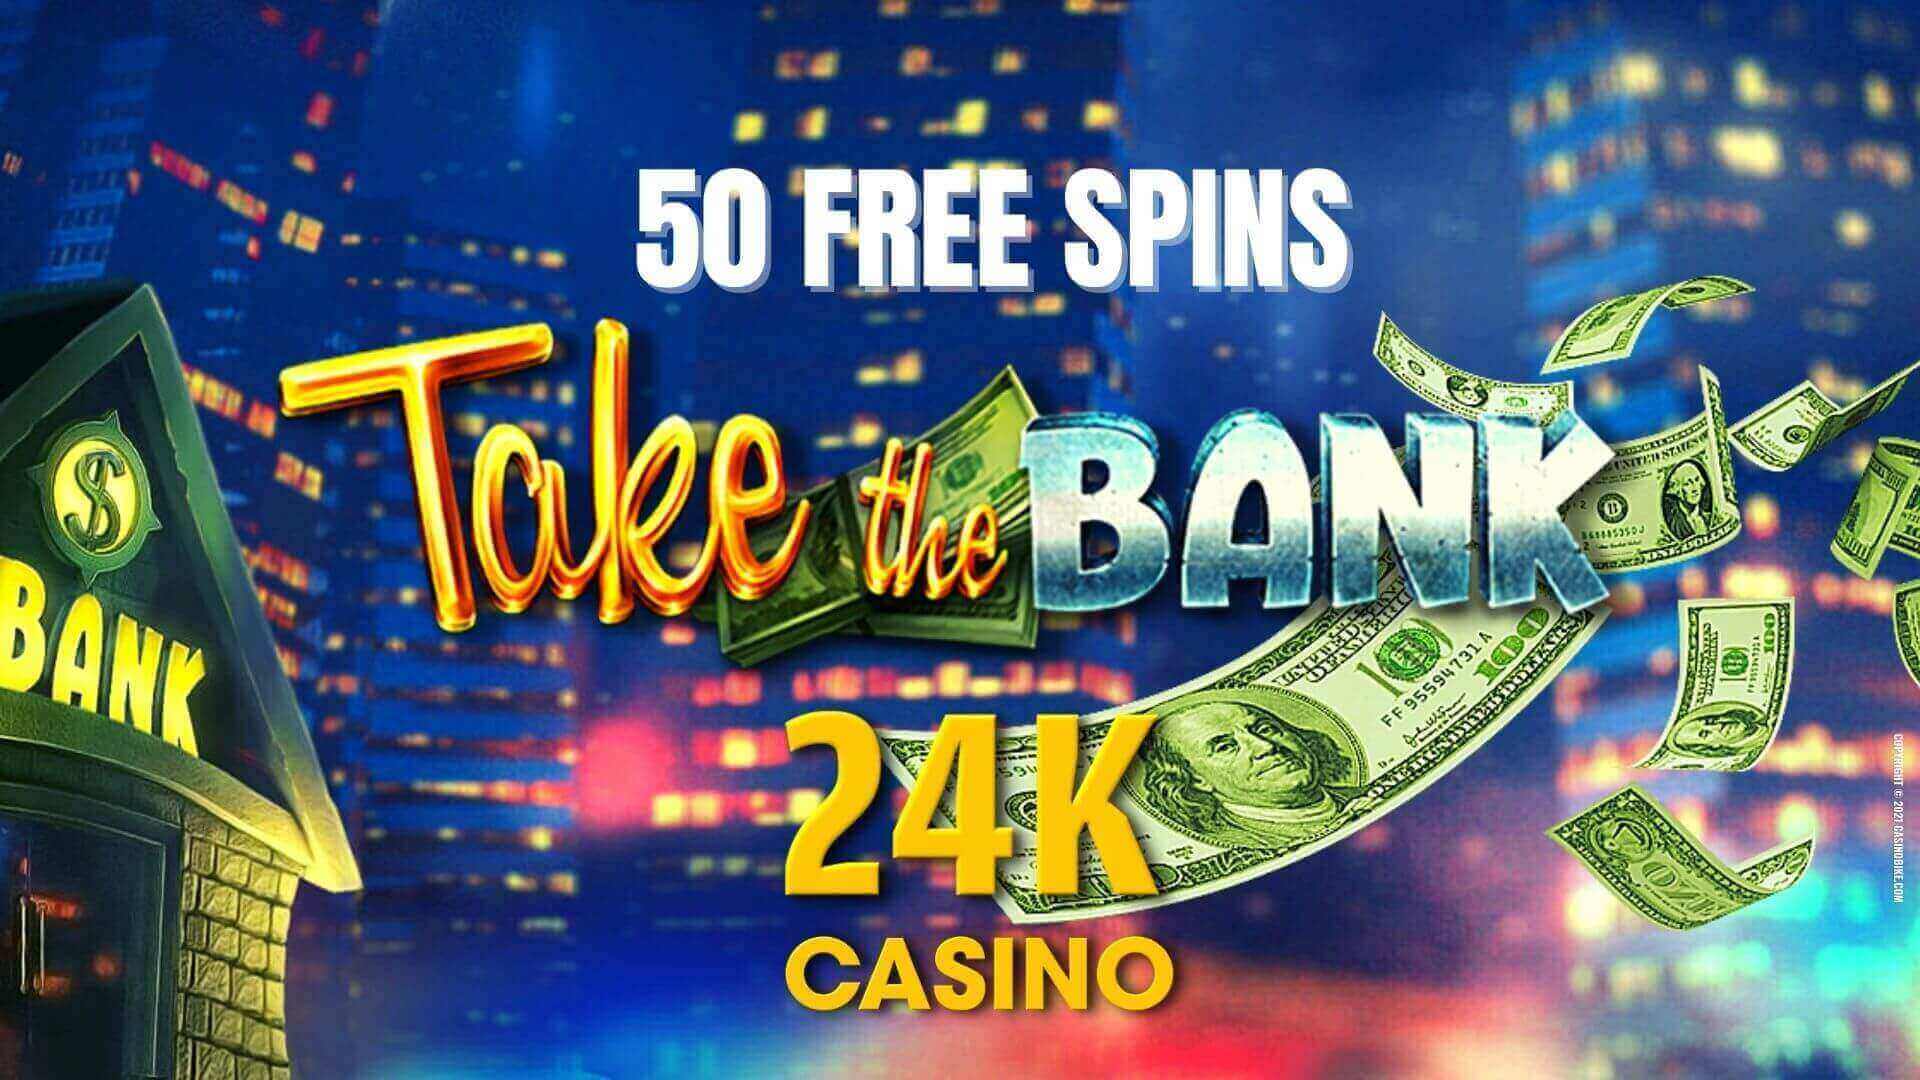 24K Casino Take the Bank Slot 50 Free Spins